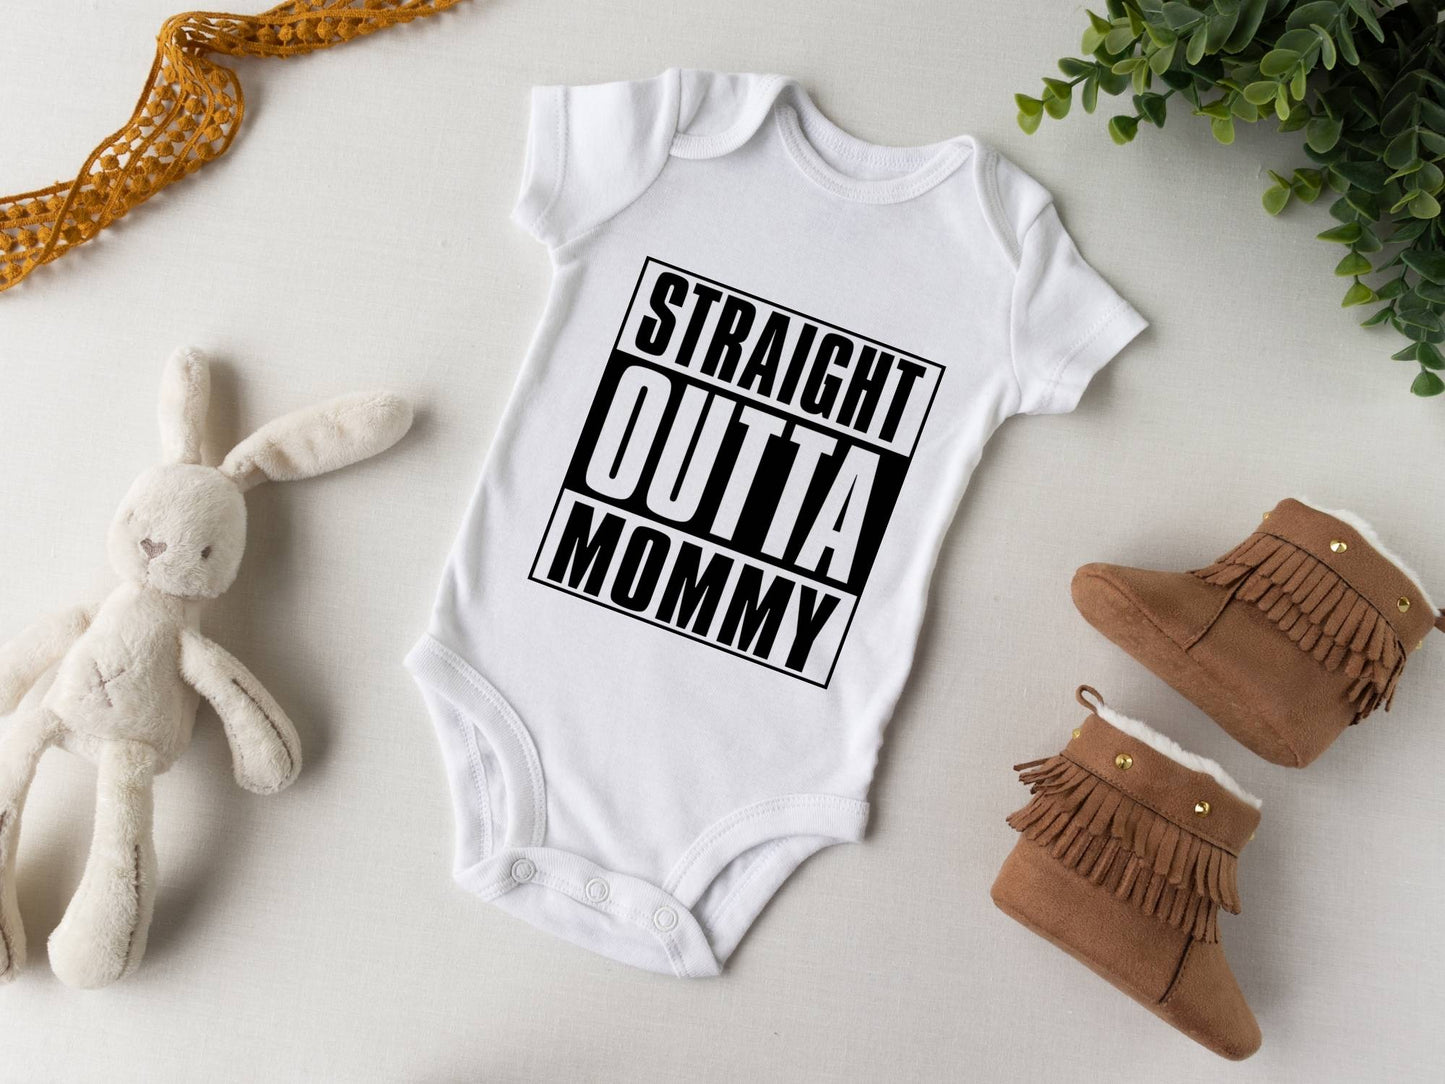 Straight Outta Mommy Baby Bodysuit